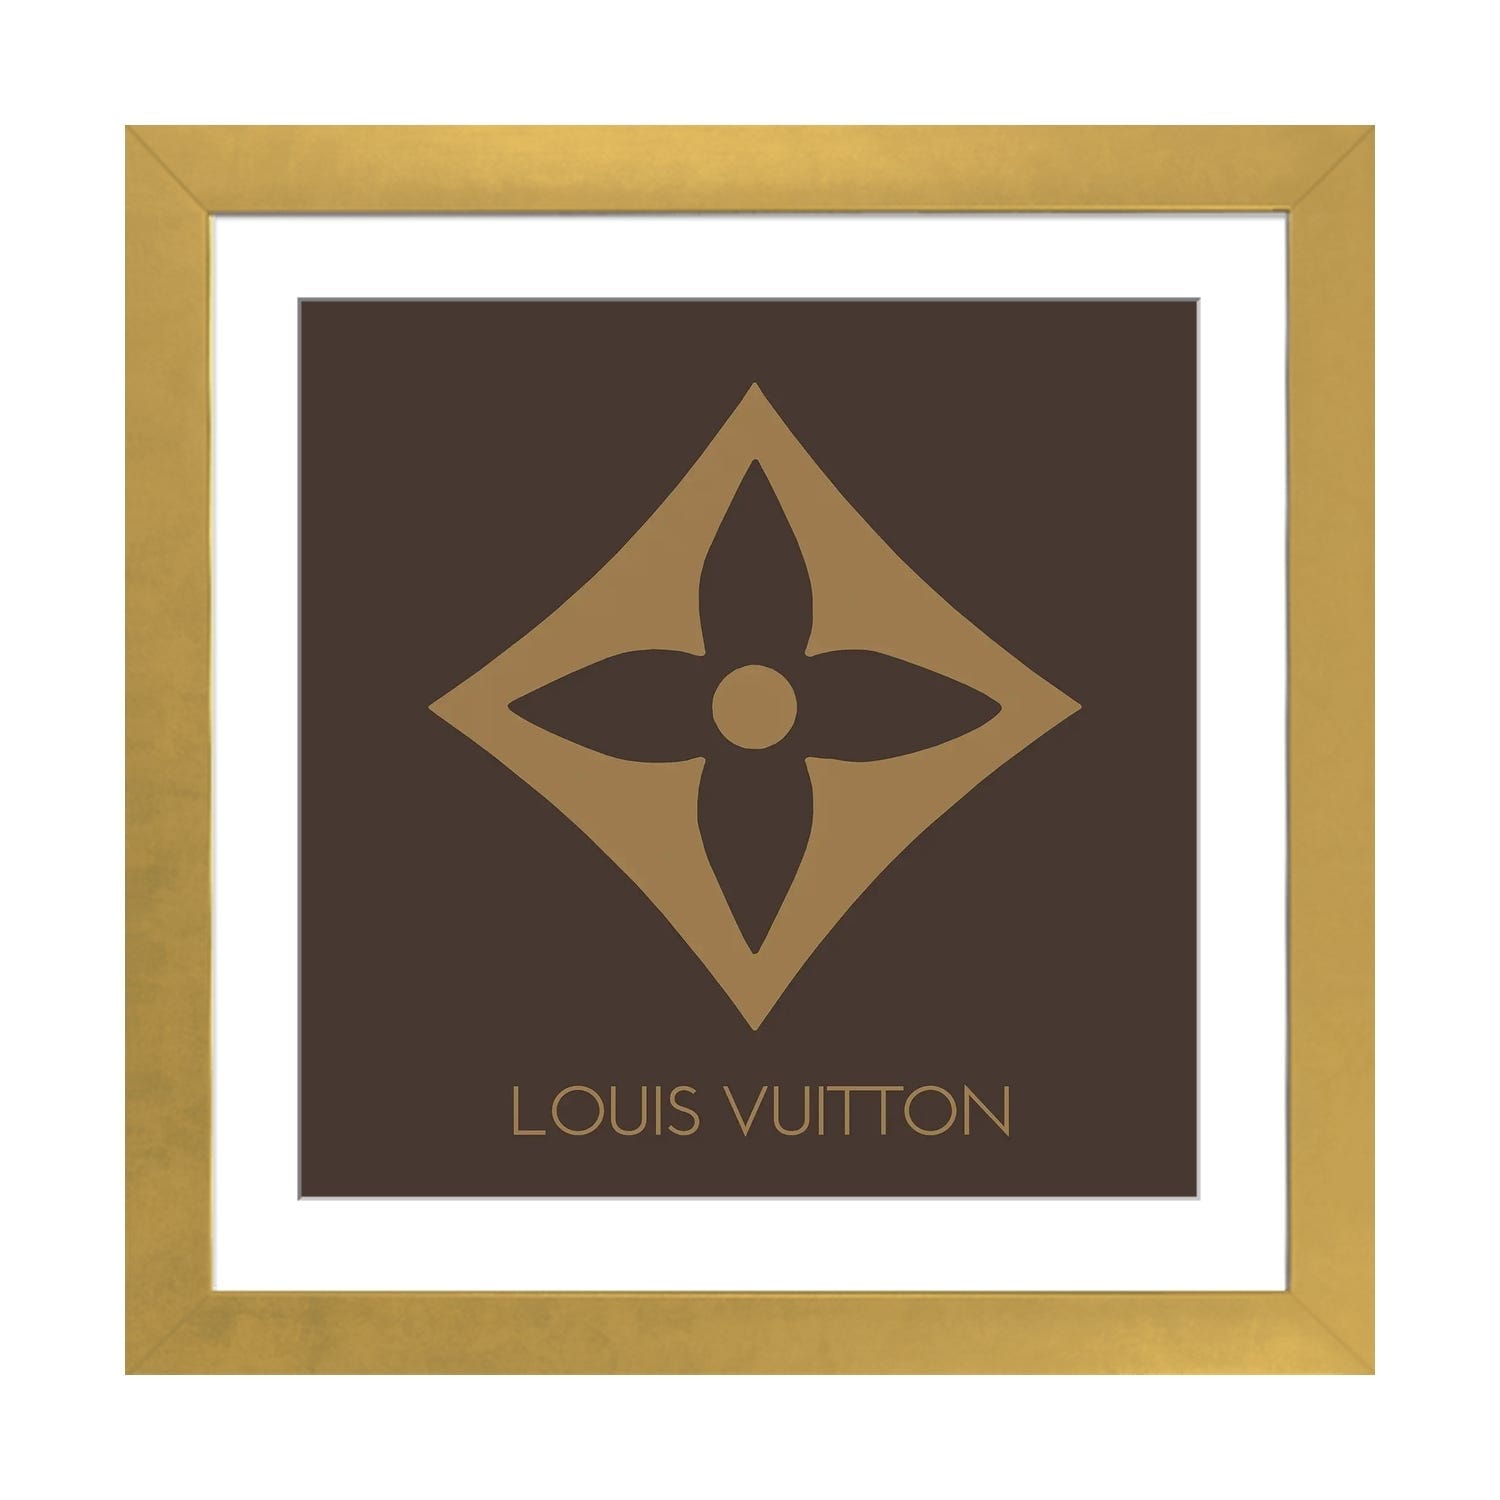 Louis Vuitton Colored Art Print by Art Mirano